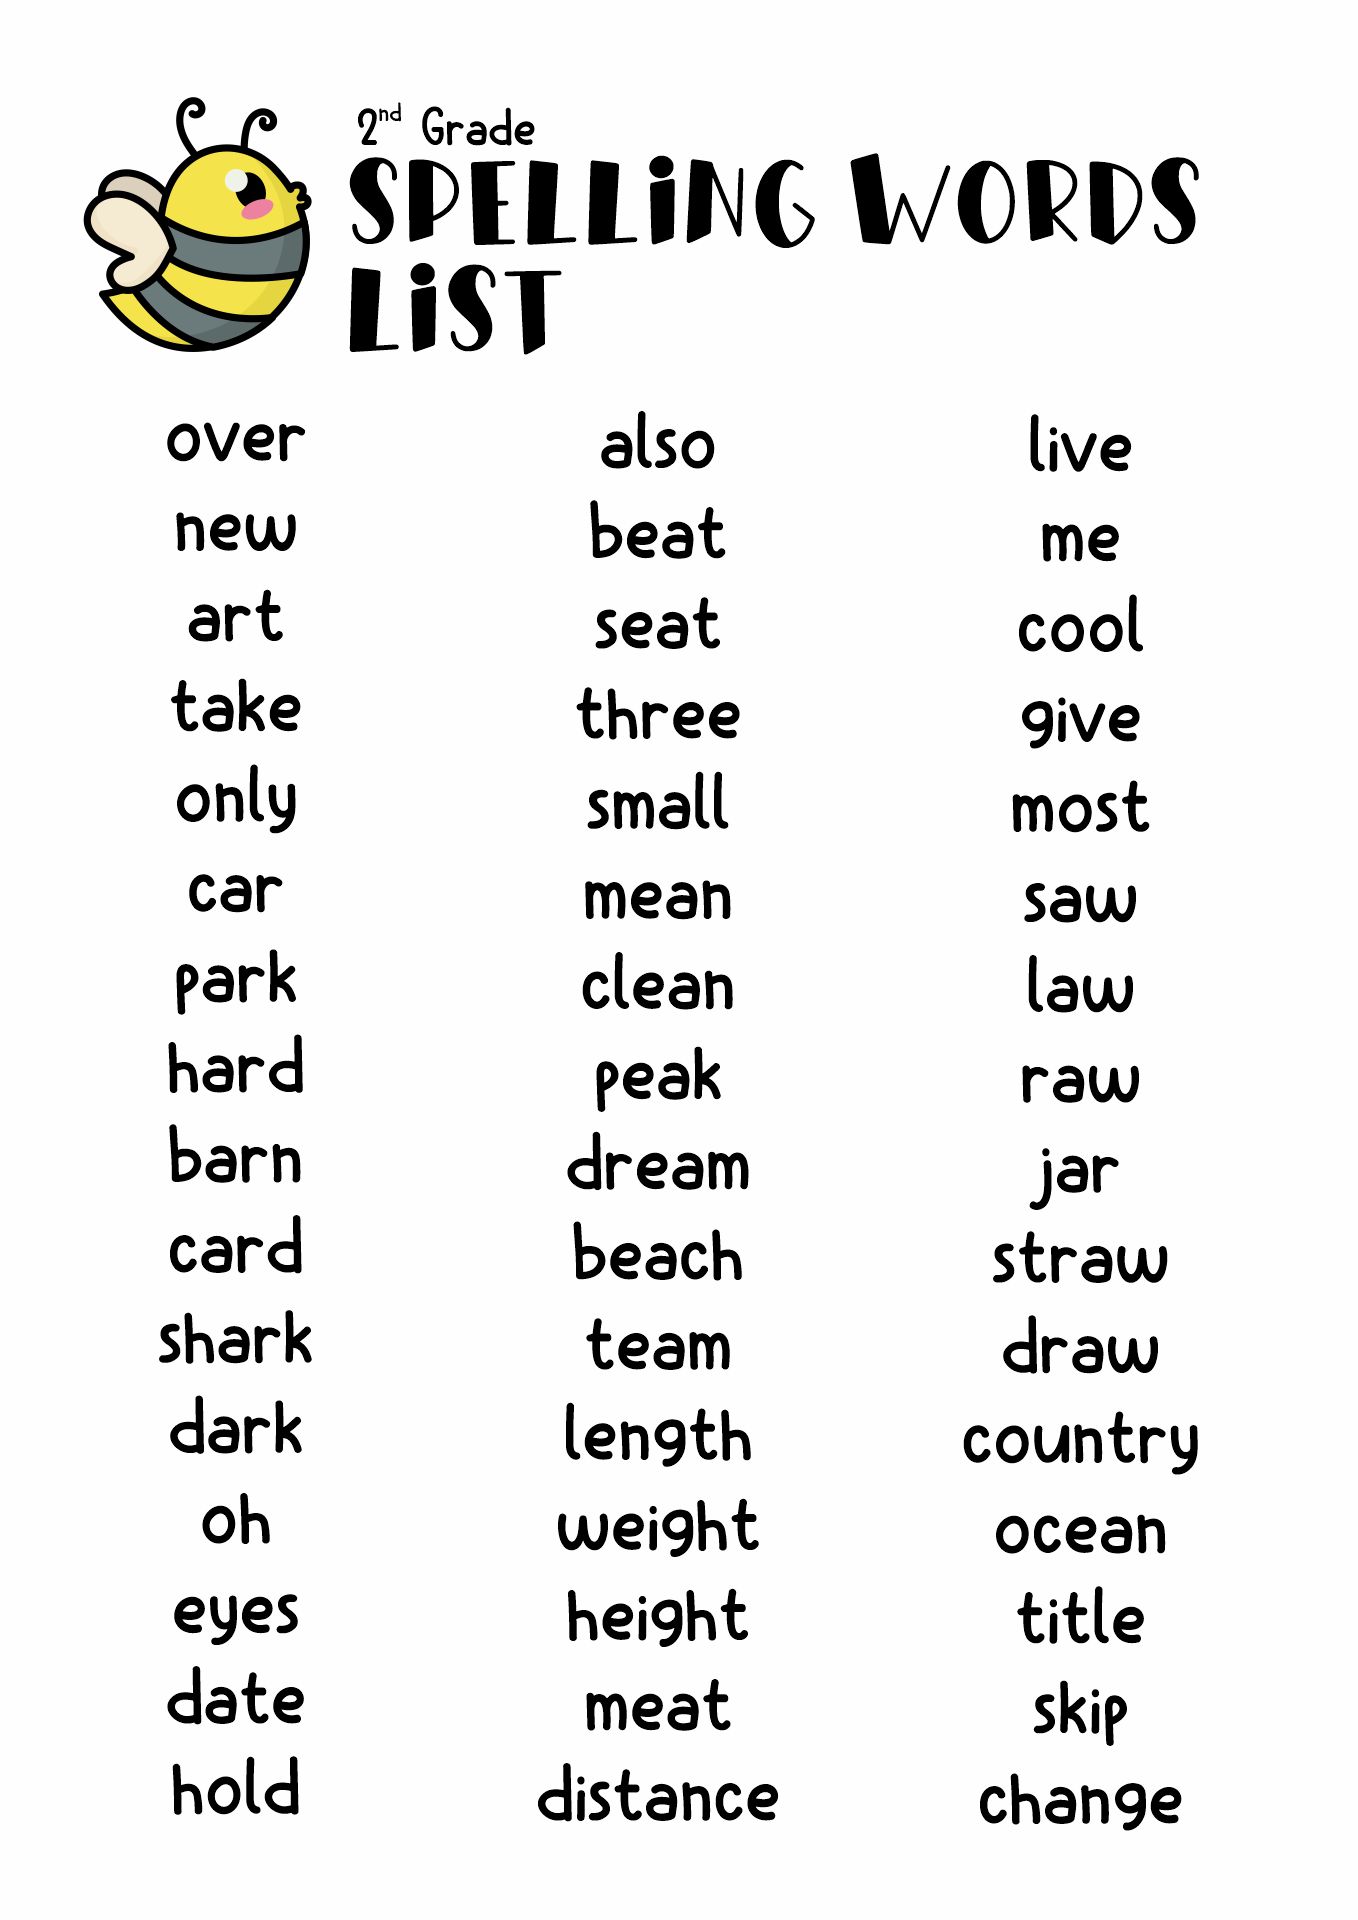 15-best-images-of-spelling-words-worksheets-grade-2-2-grade-spelling